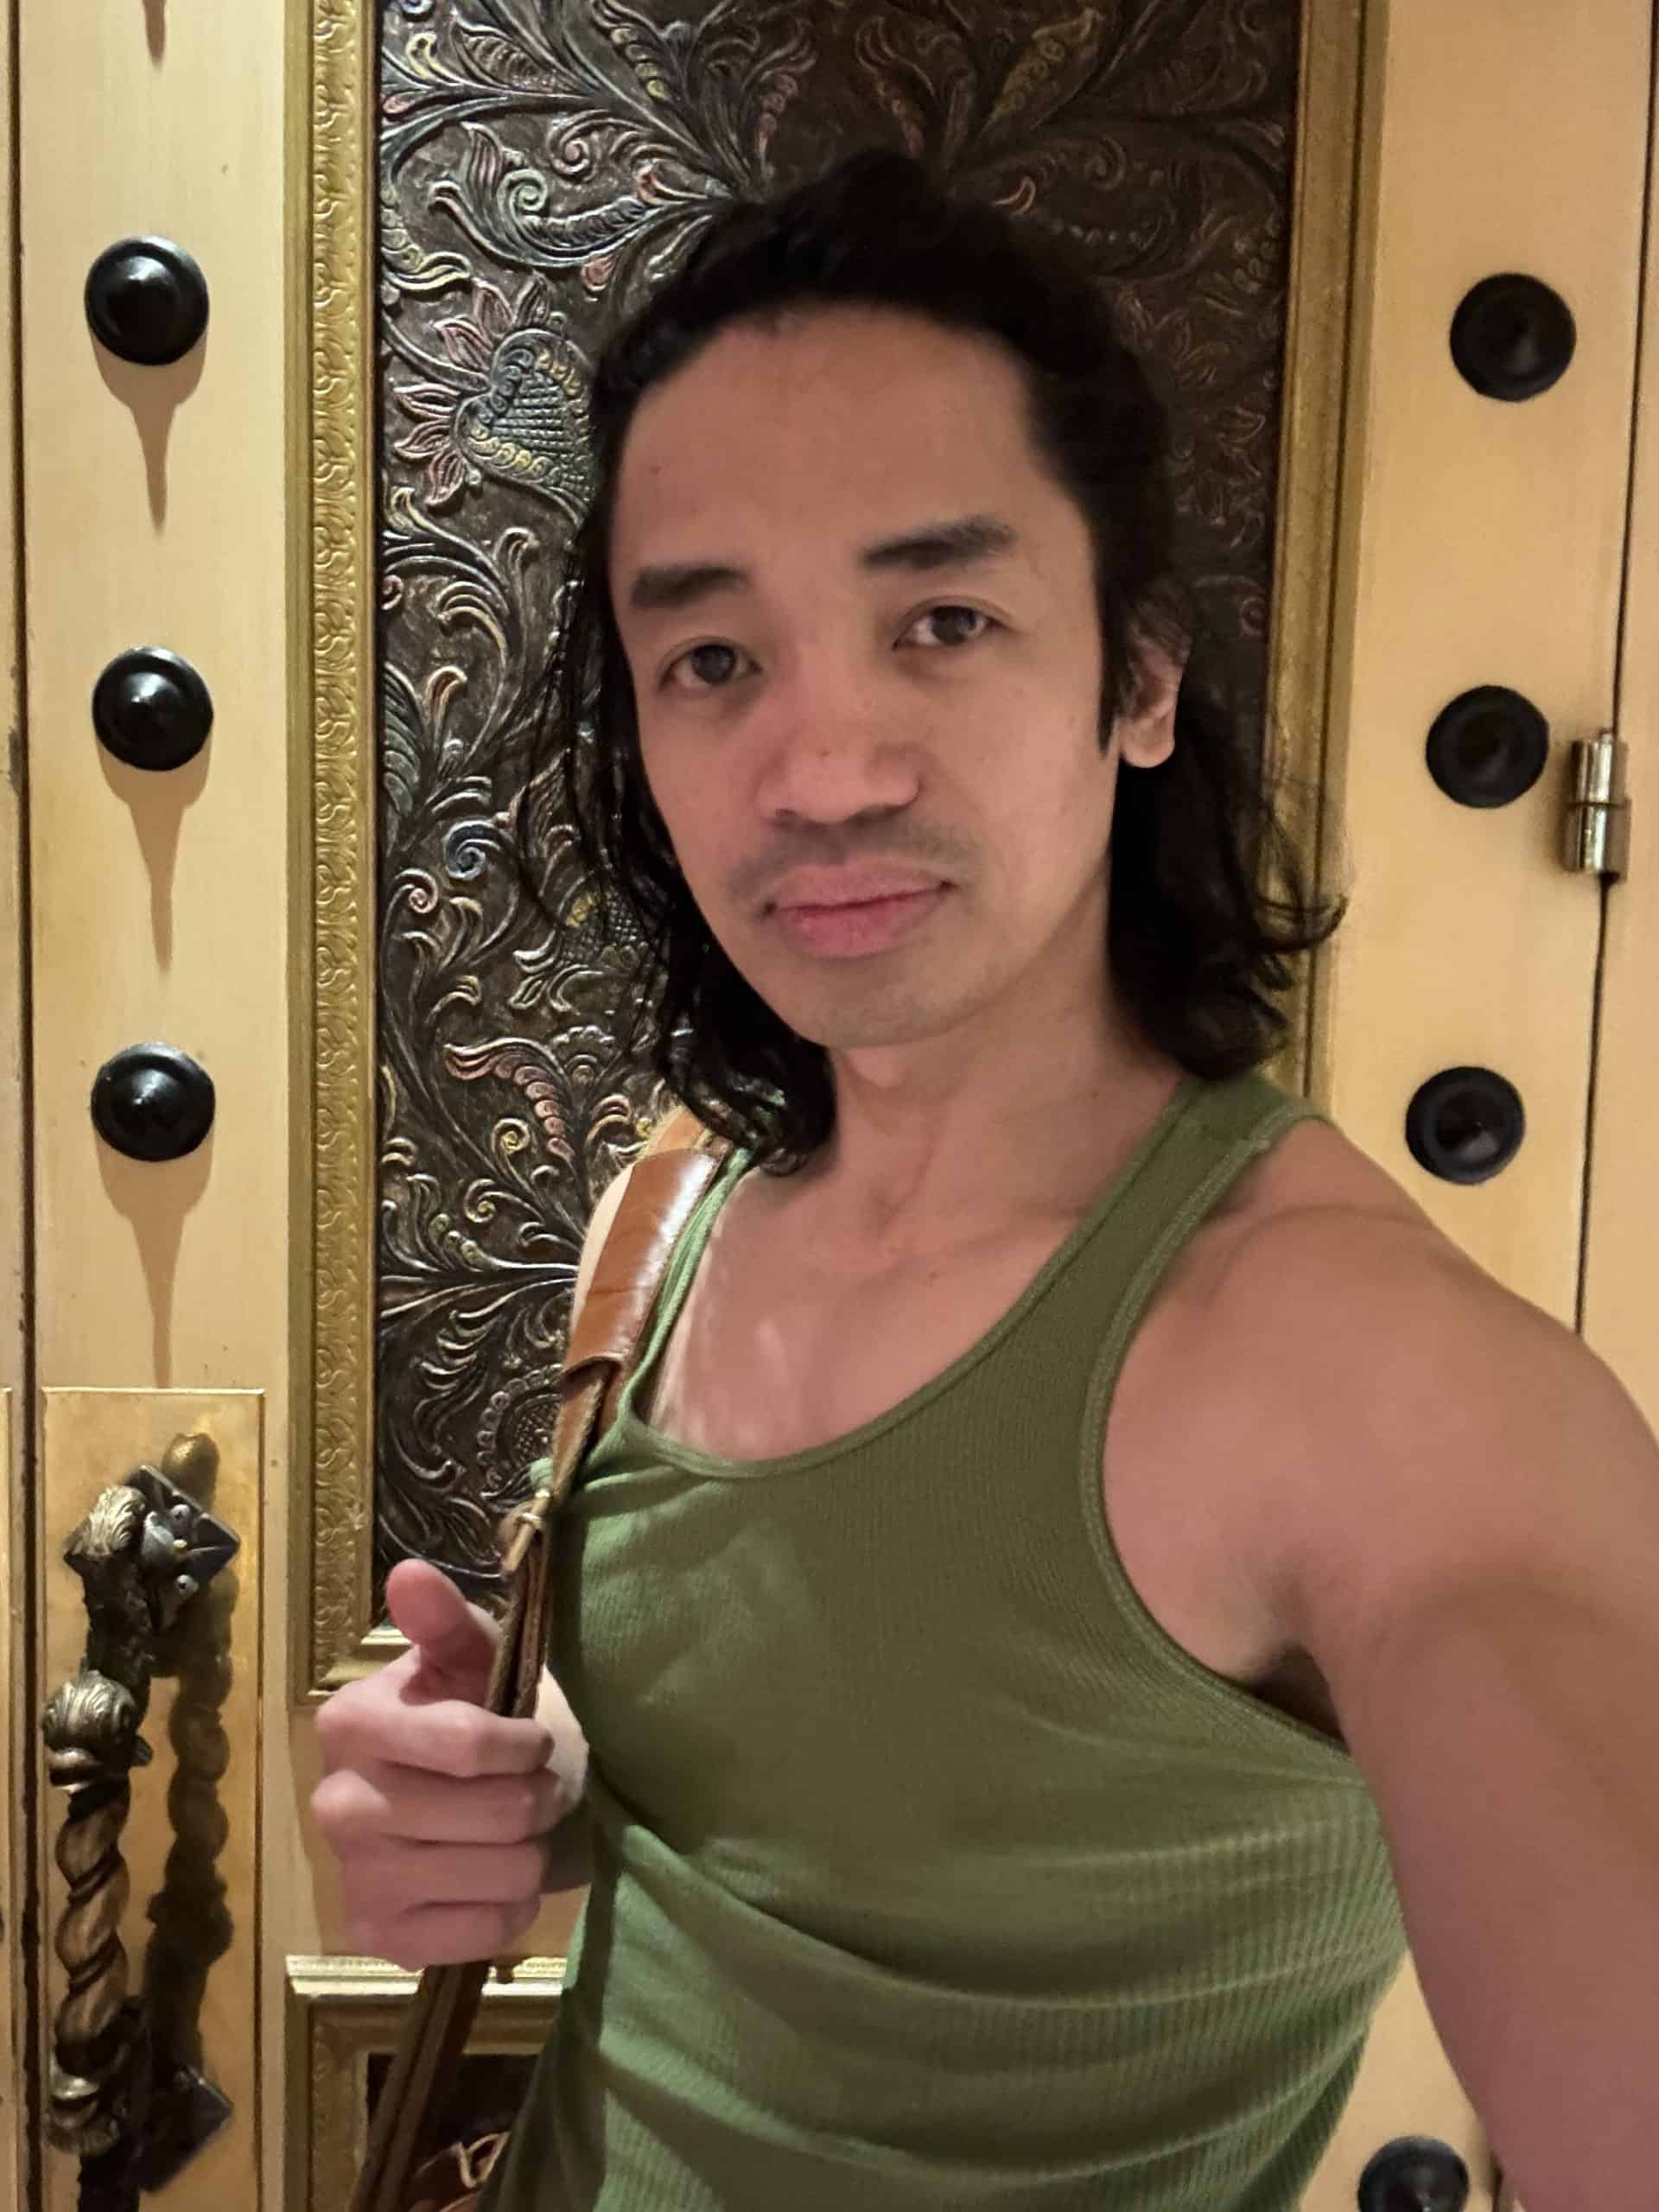 Jax Solomon Premier Sensual Tantra Bodywork Las Vegas Selfie By Ornate Door in TI